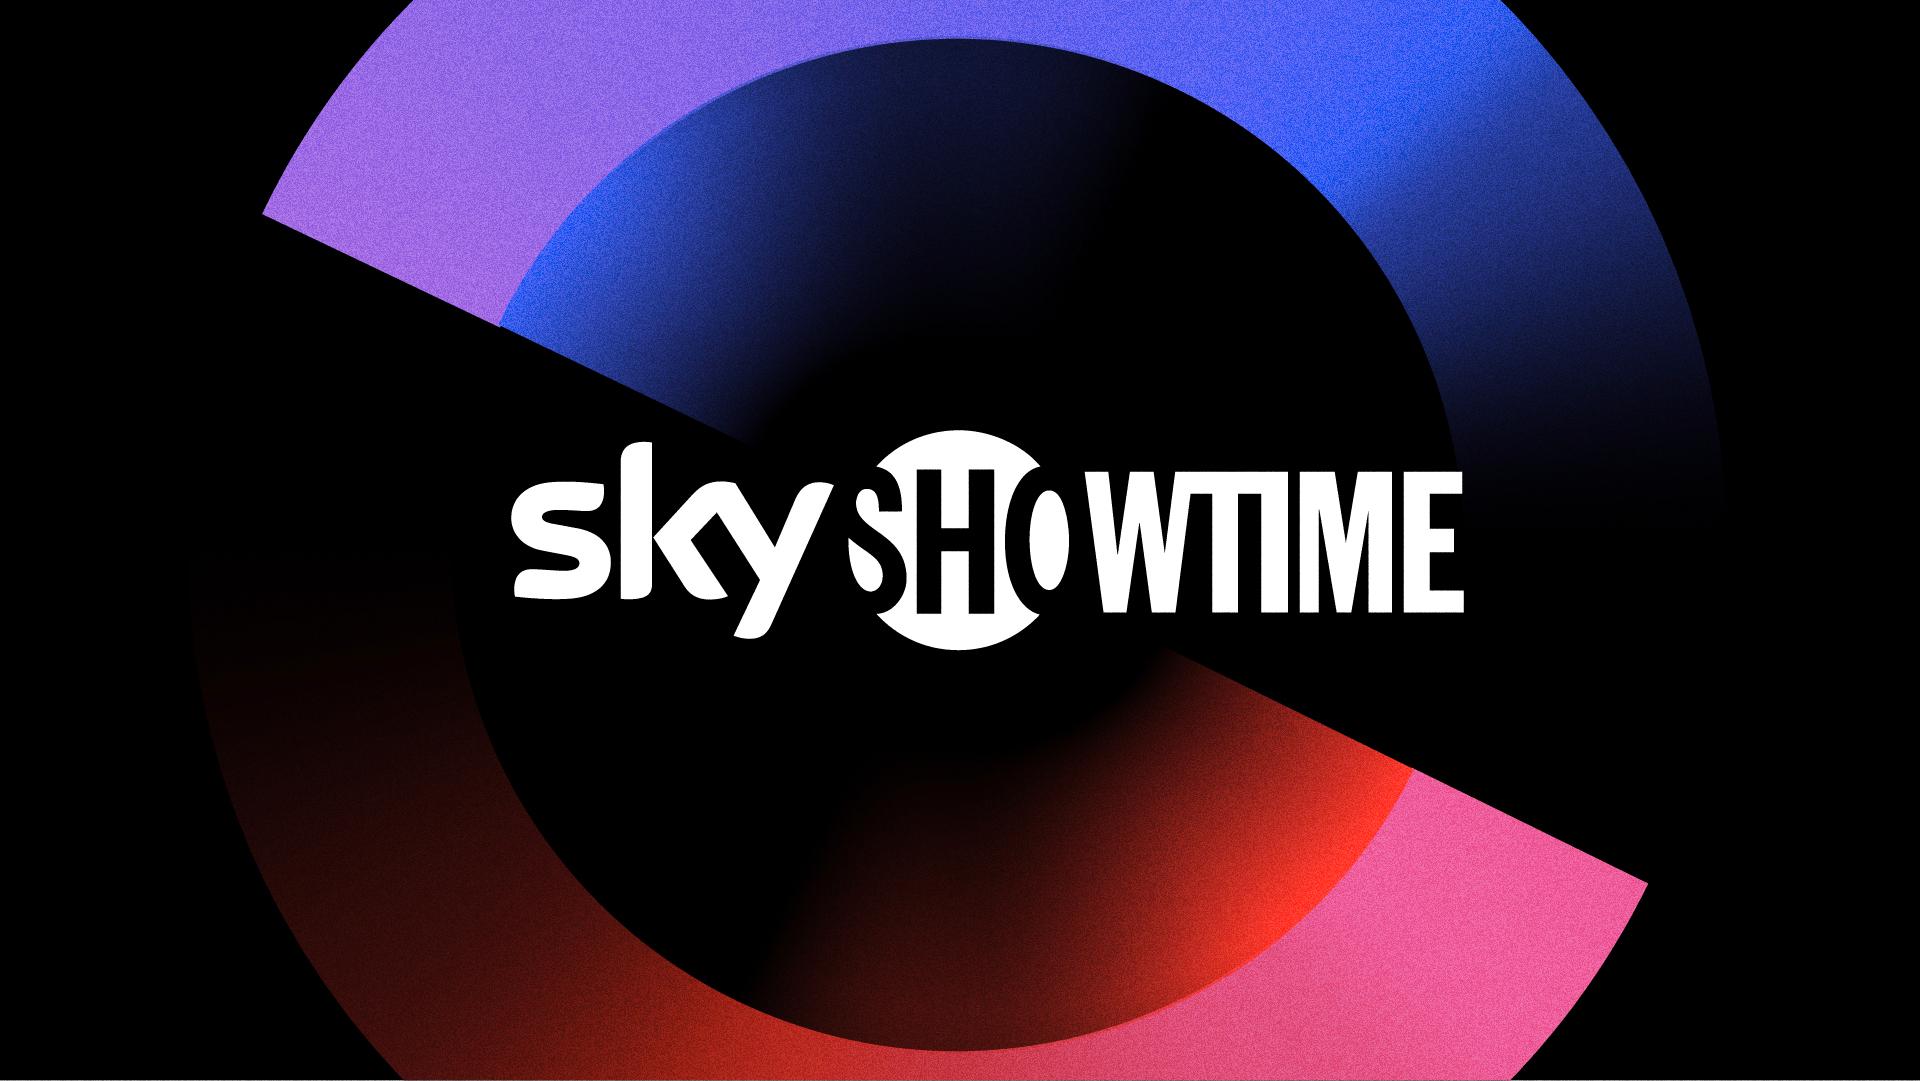 SkyShowtime er navnet på en ny strømmetjeneste som kommer til Norge i 2022. Den vil erstatte dagens Paramount+. 